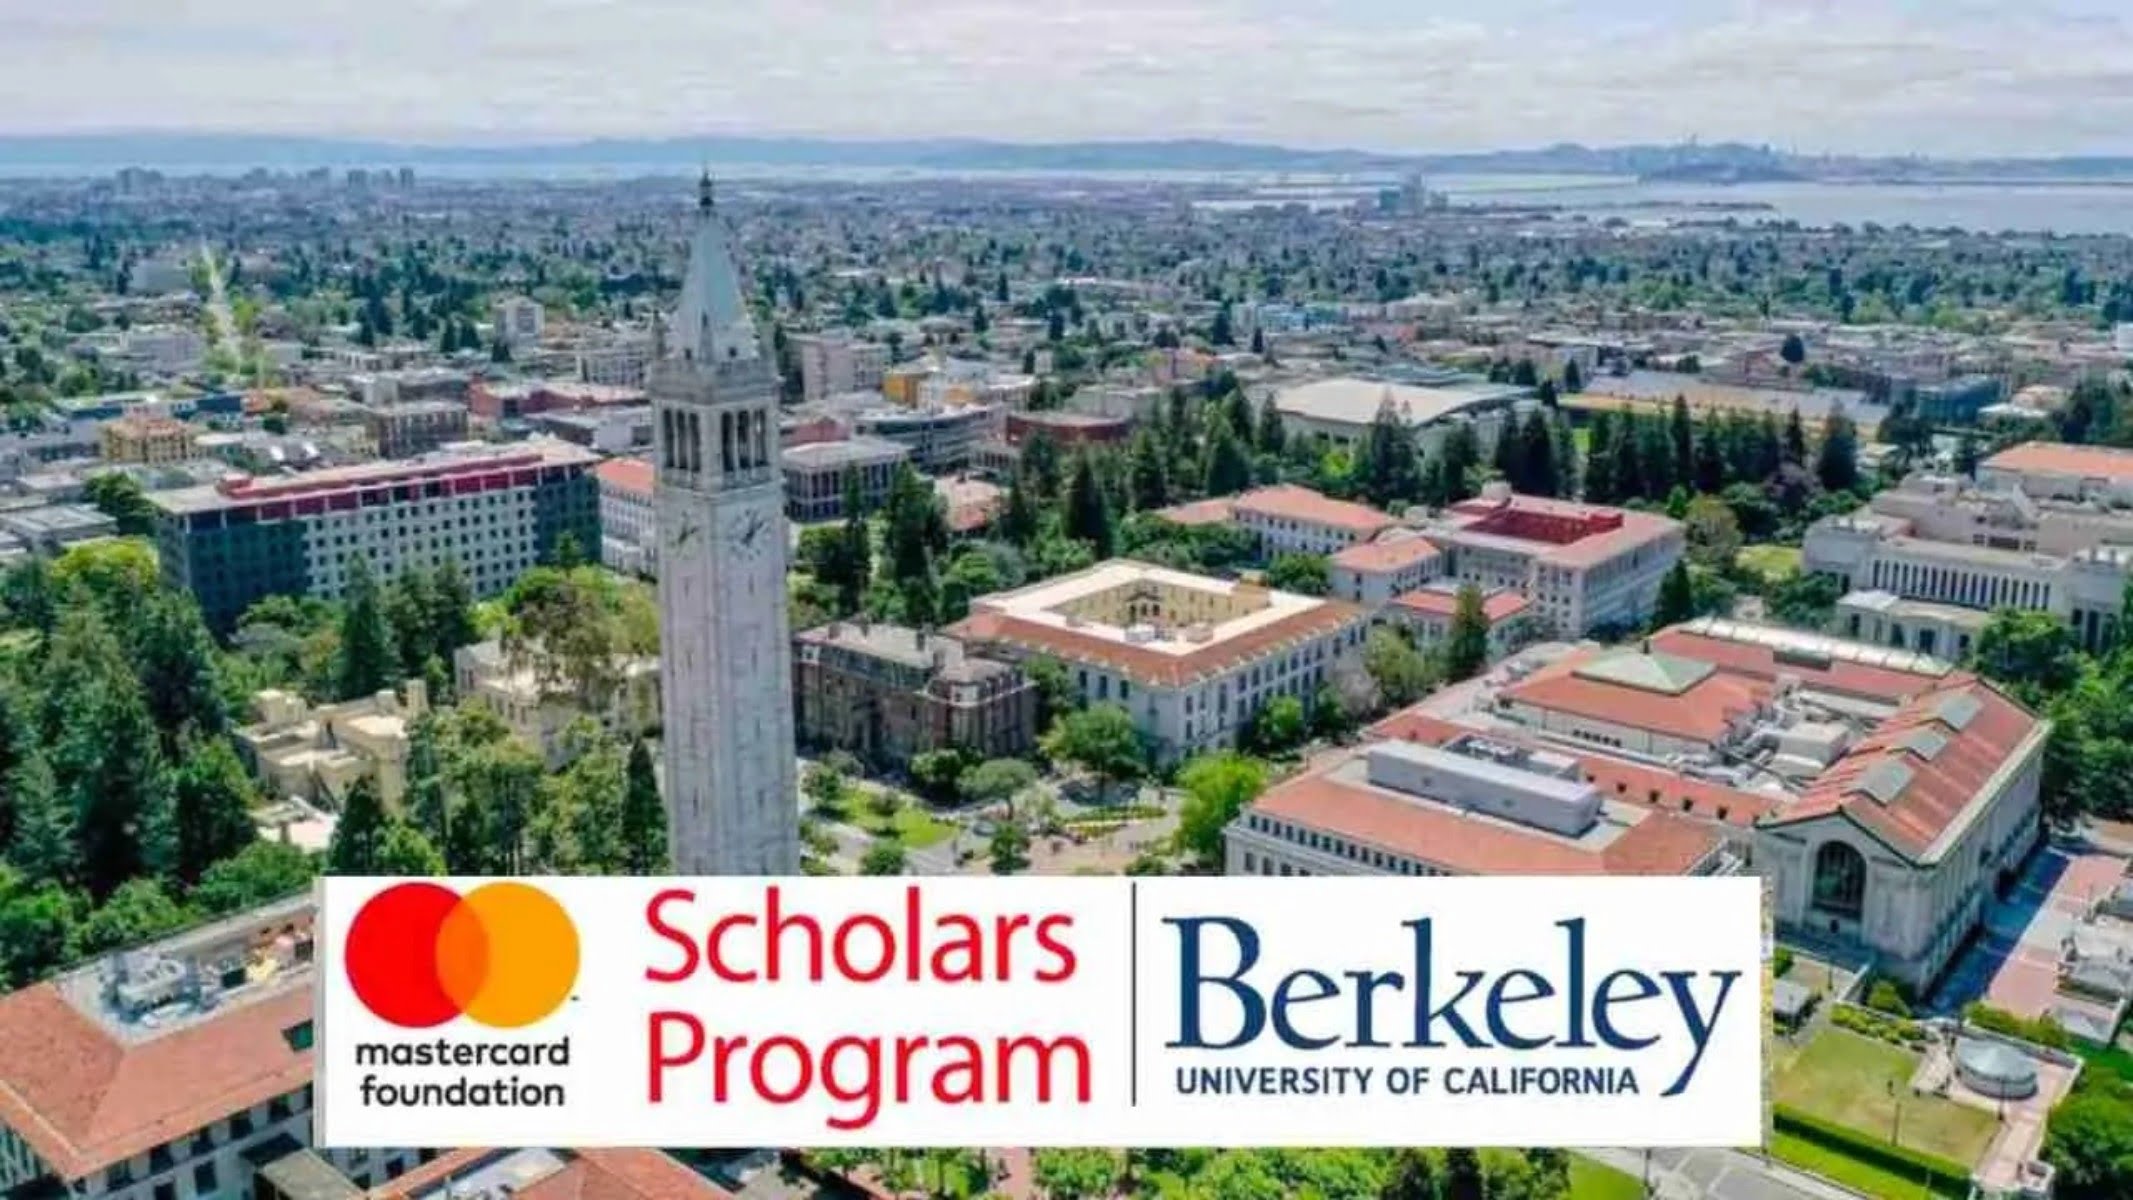 Berkeley Mastercard Foundation Scholar Program 2023 for Africans